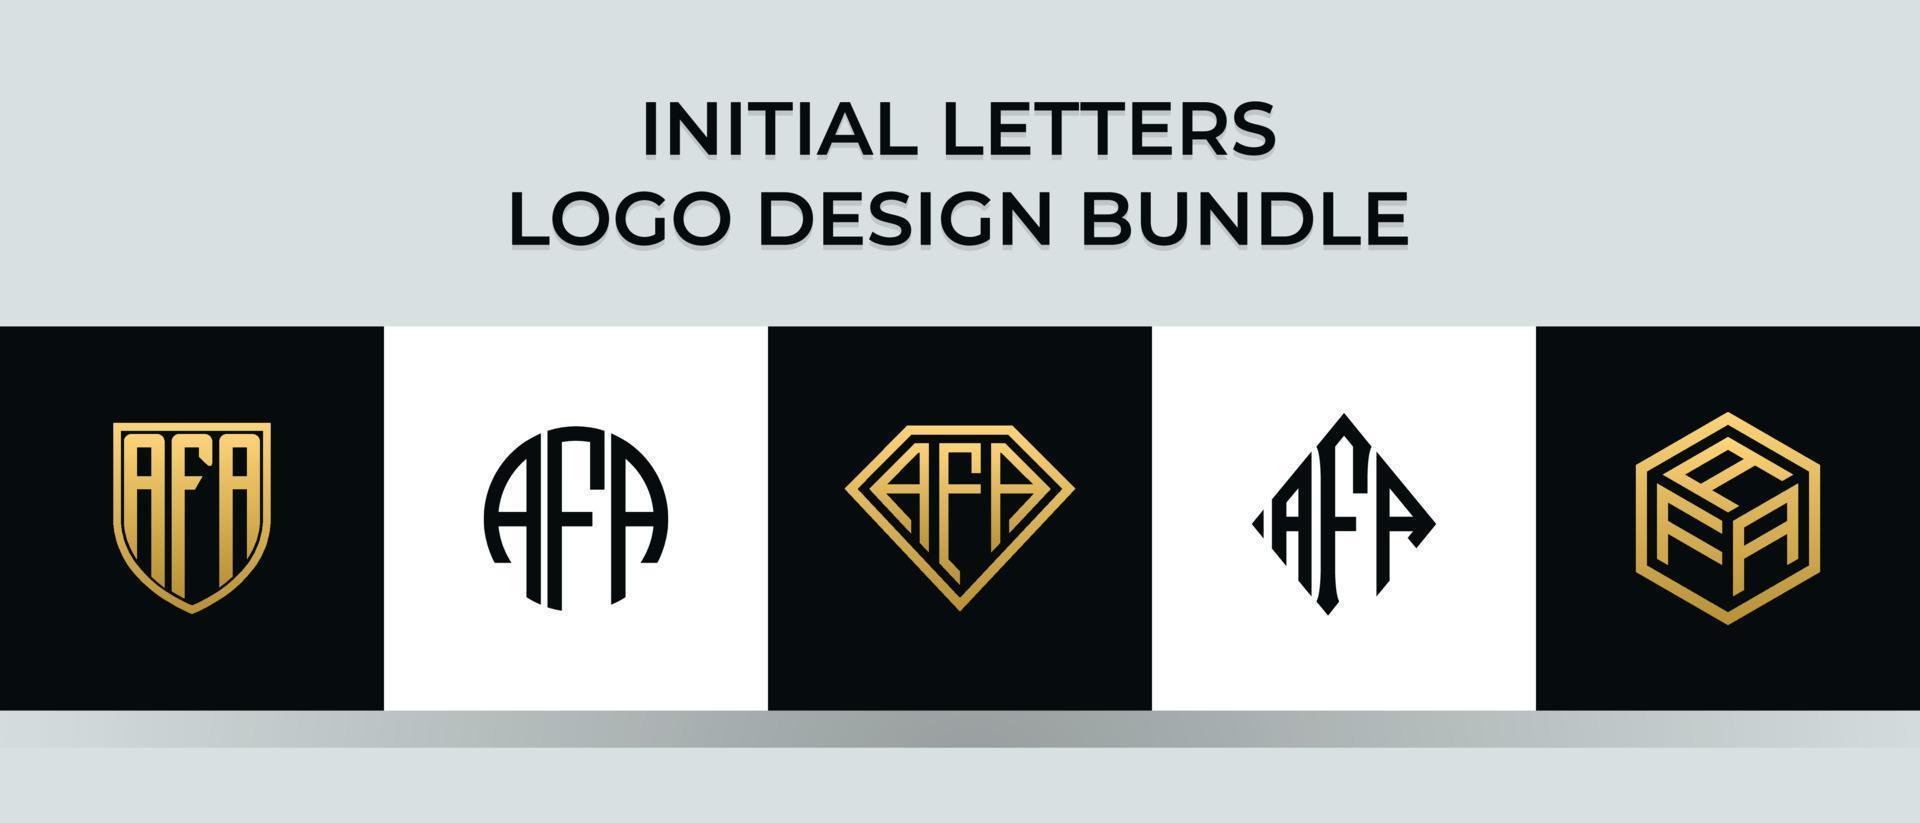 Initial letters AFA logo designs Bundle vector